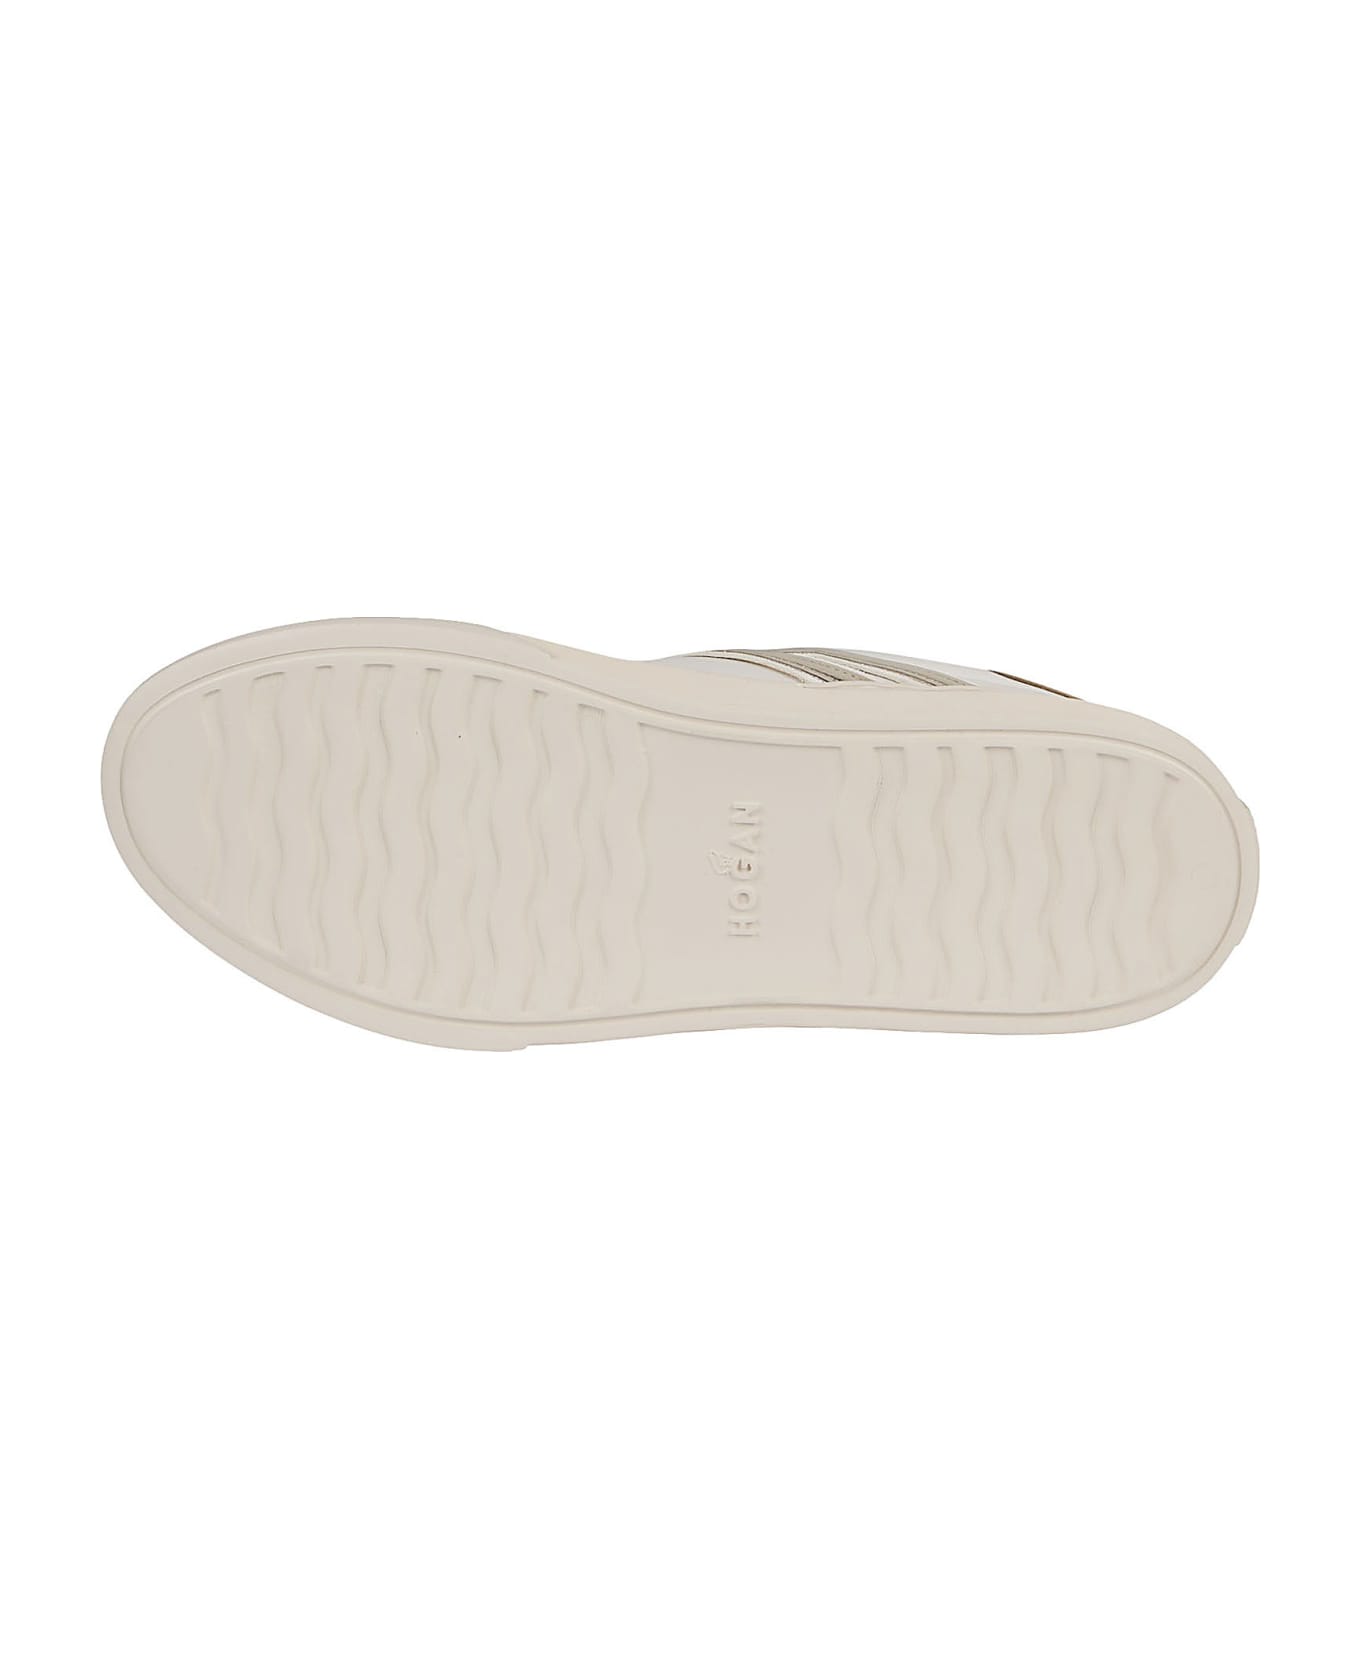 Hogan H365 Sneakers - Yogurt/platino/bianco Marmo